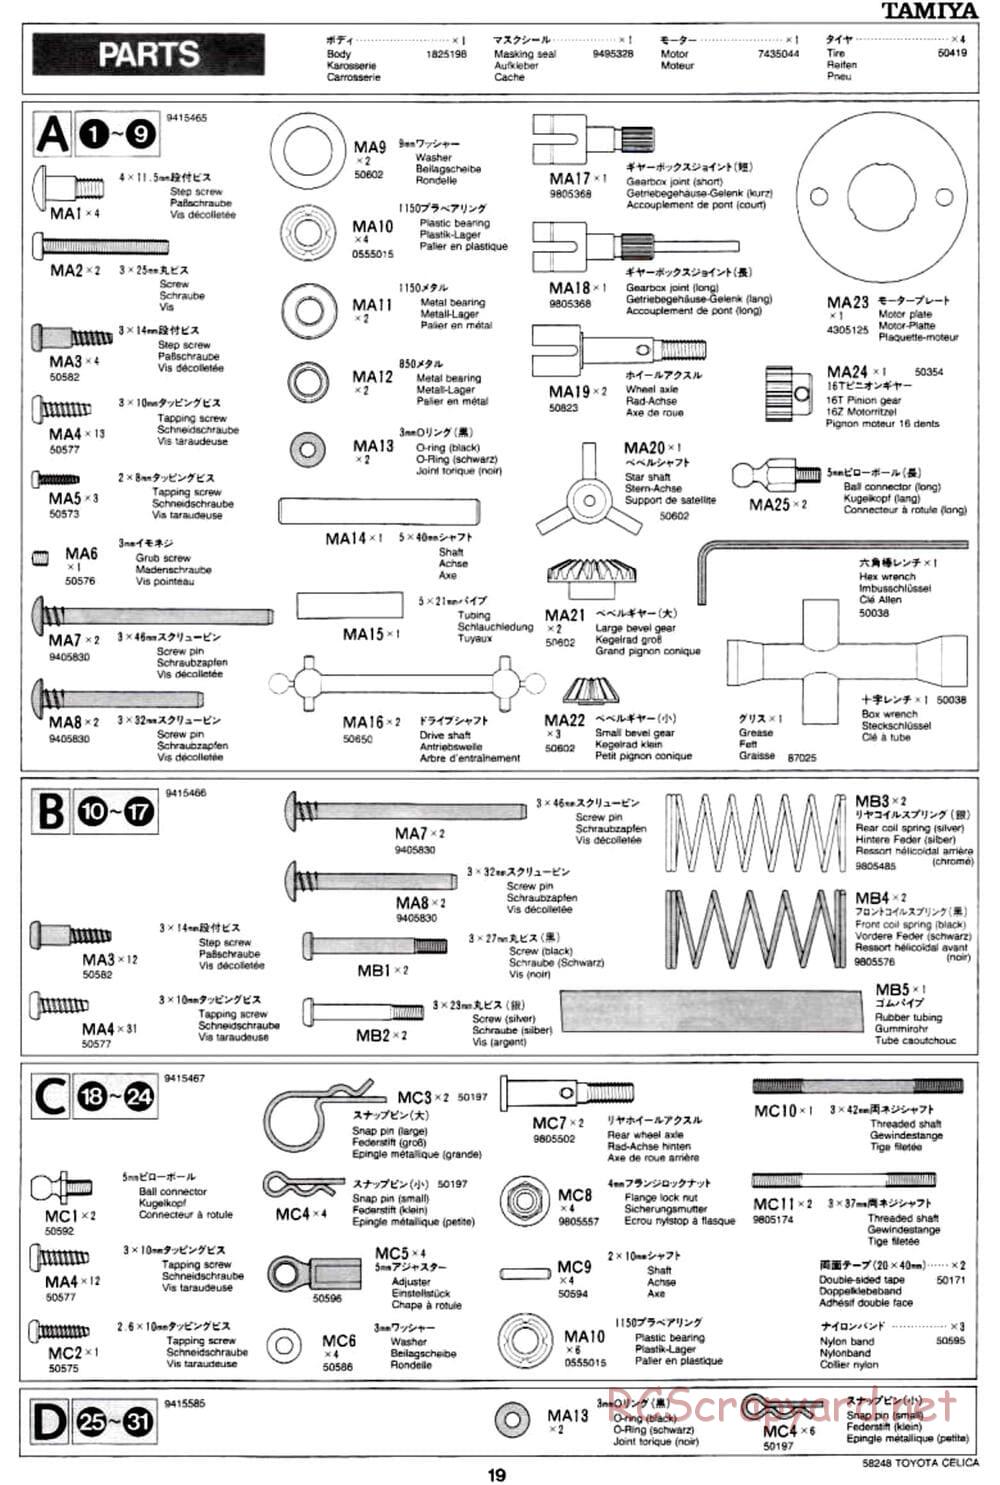 Tamiya - Toyota Celica - FF-02 Chassis - Manual - Page 19